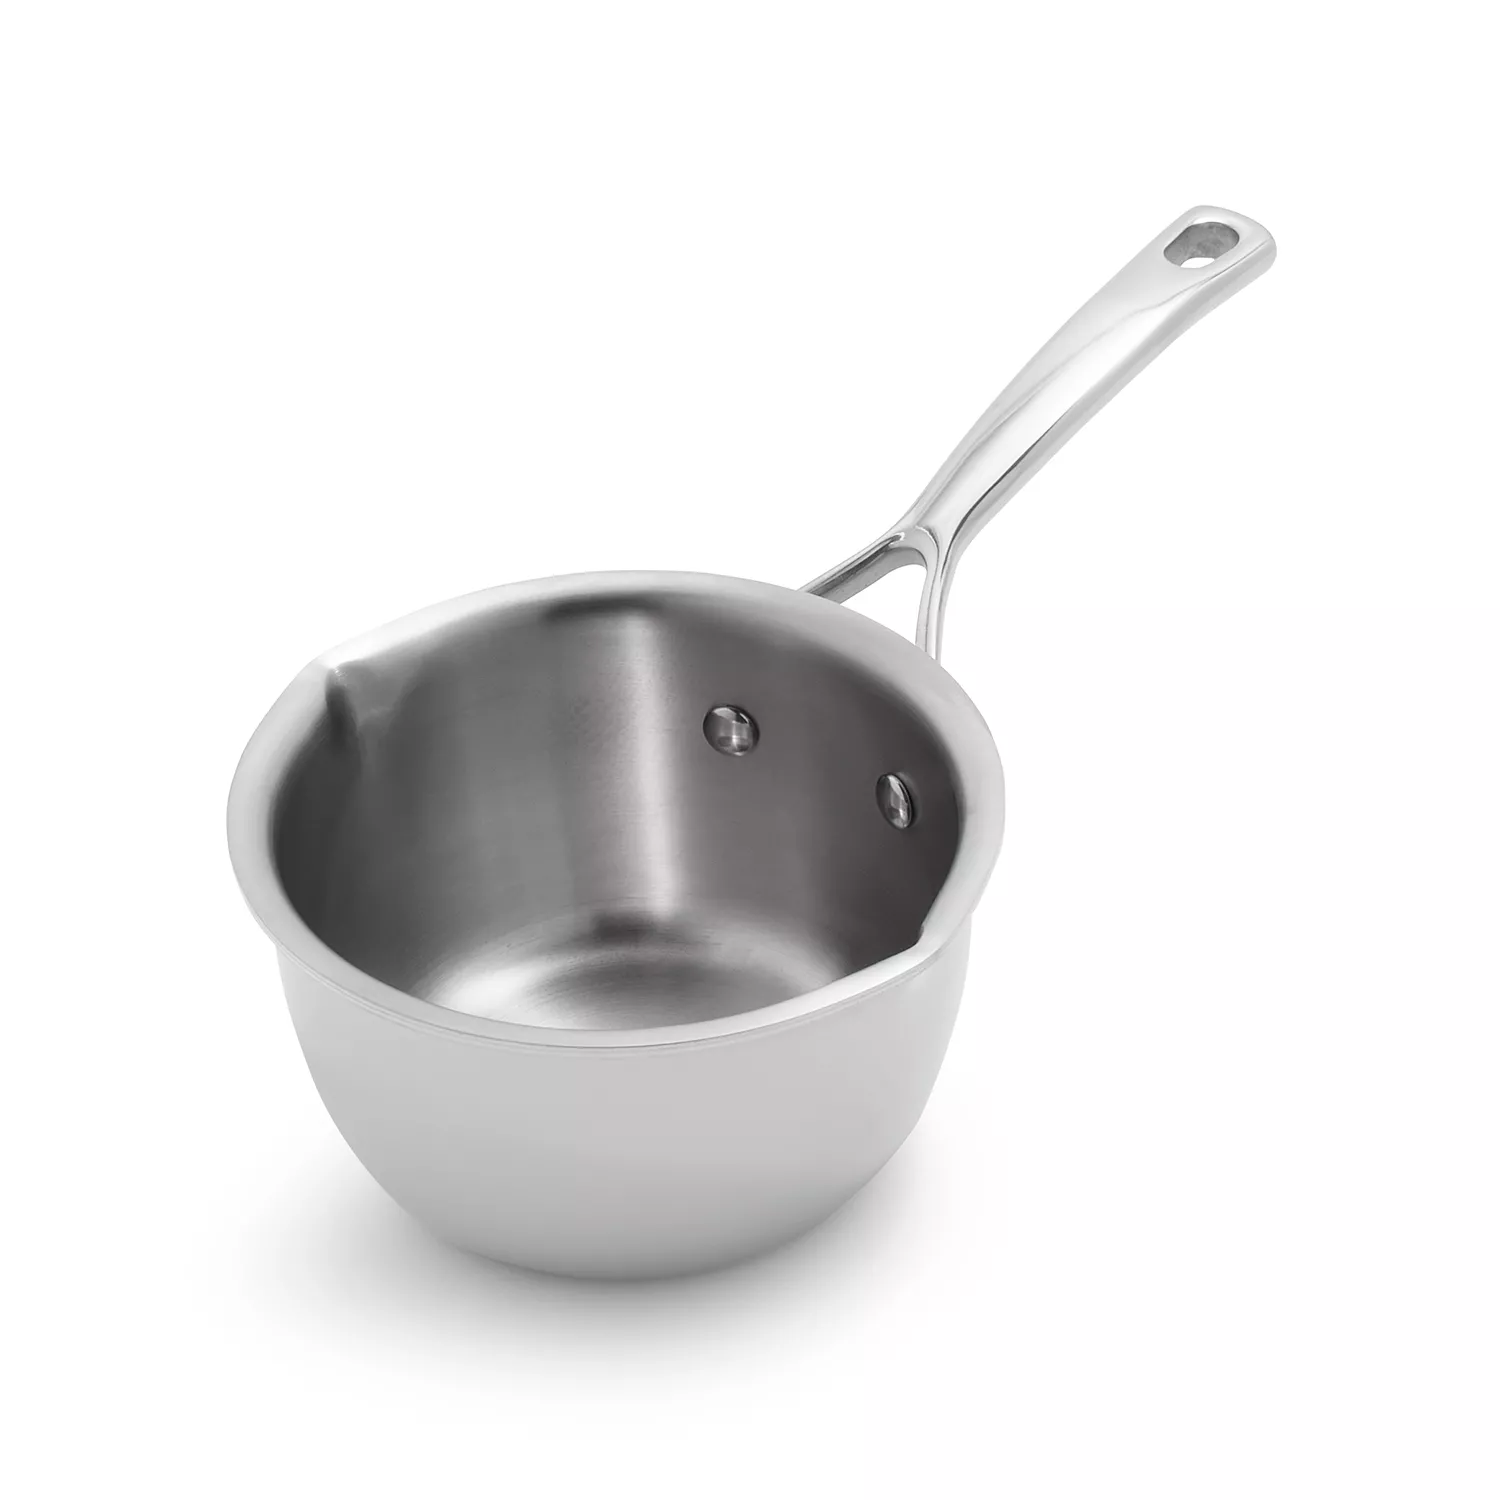 Butter warmer melter, Ceramic pan